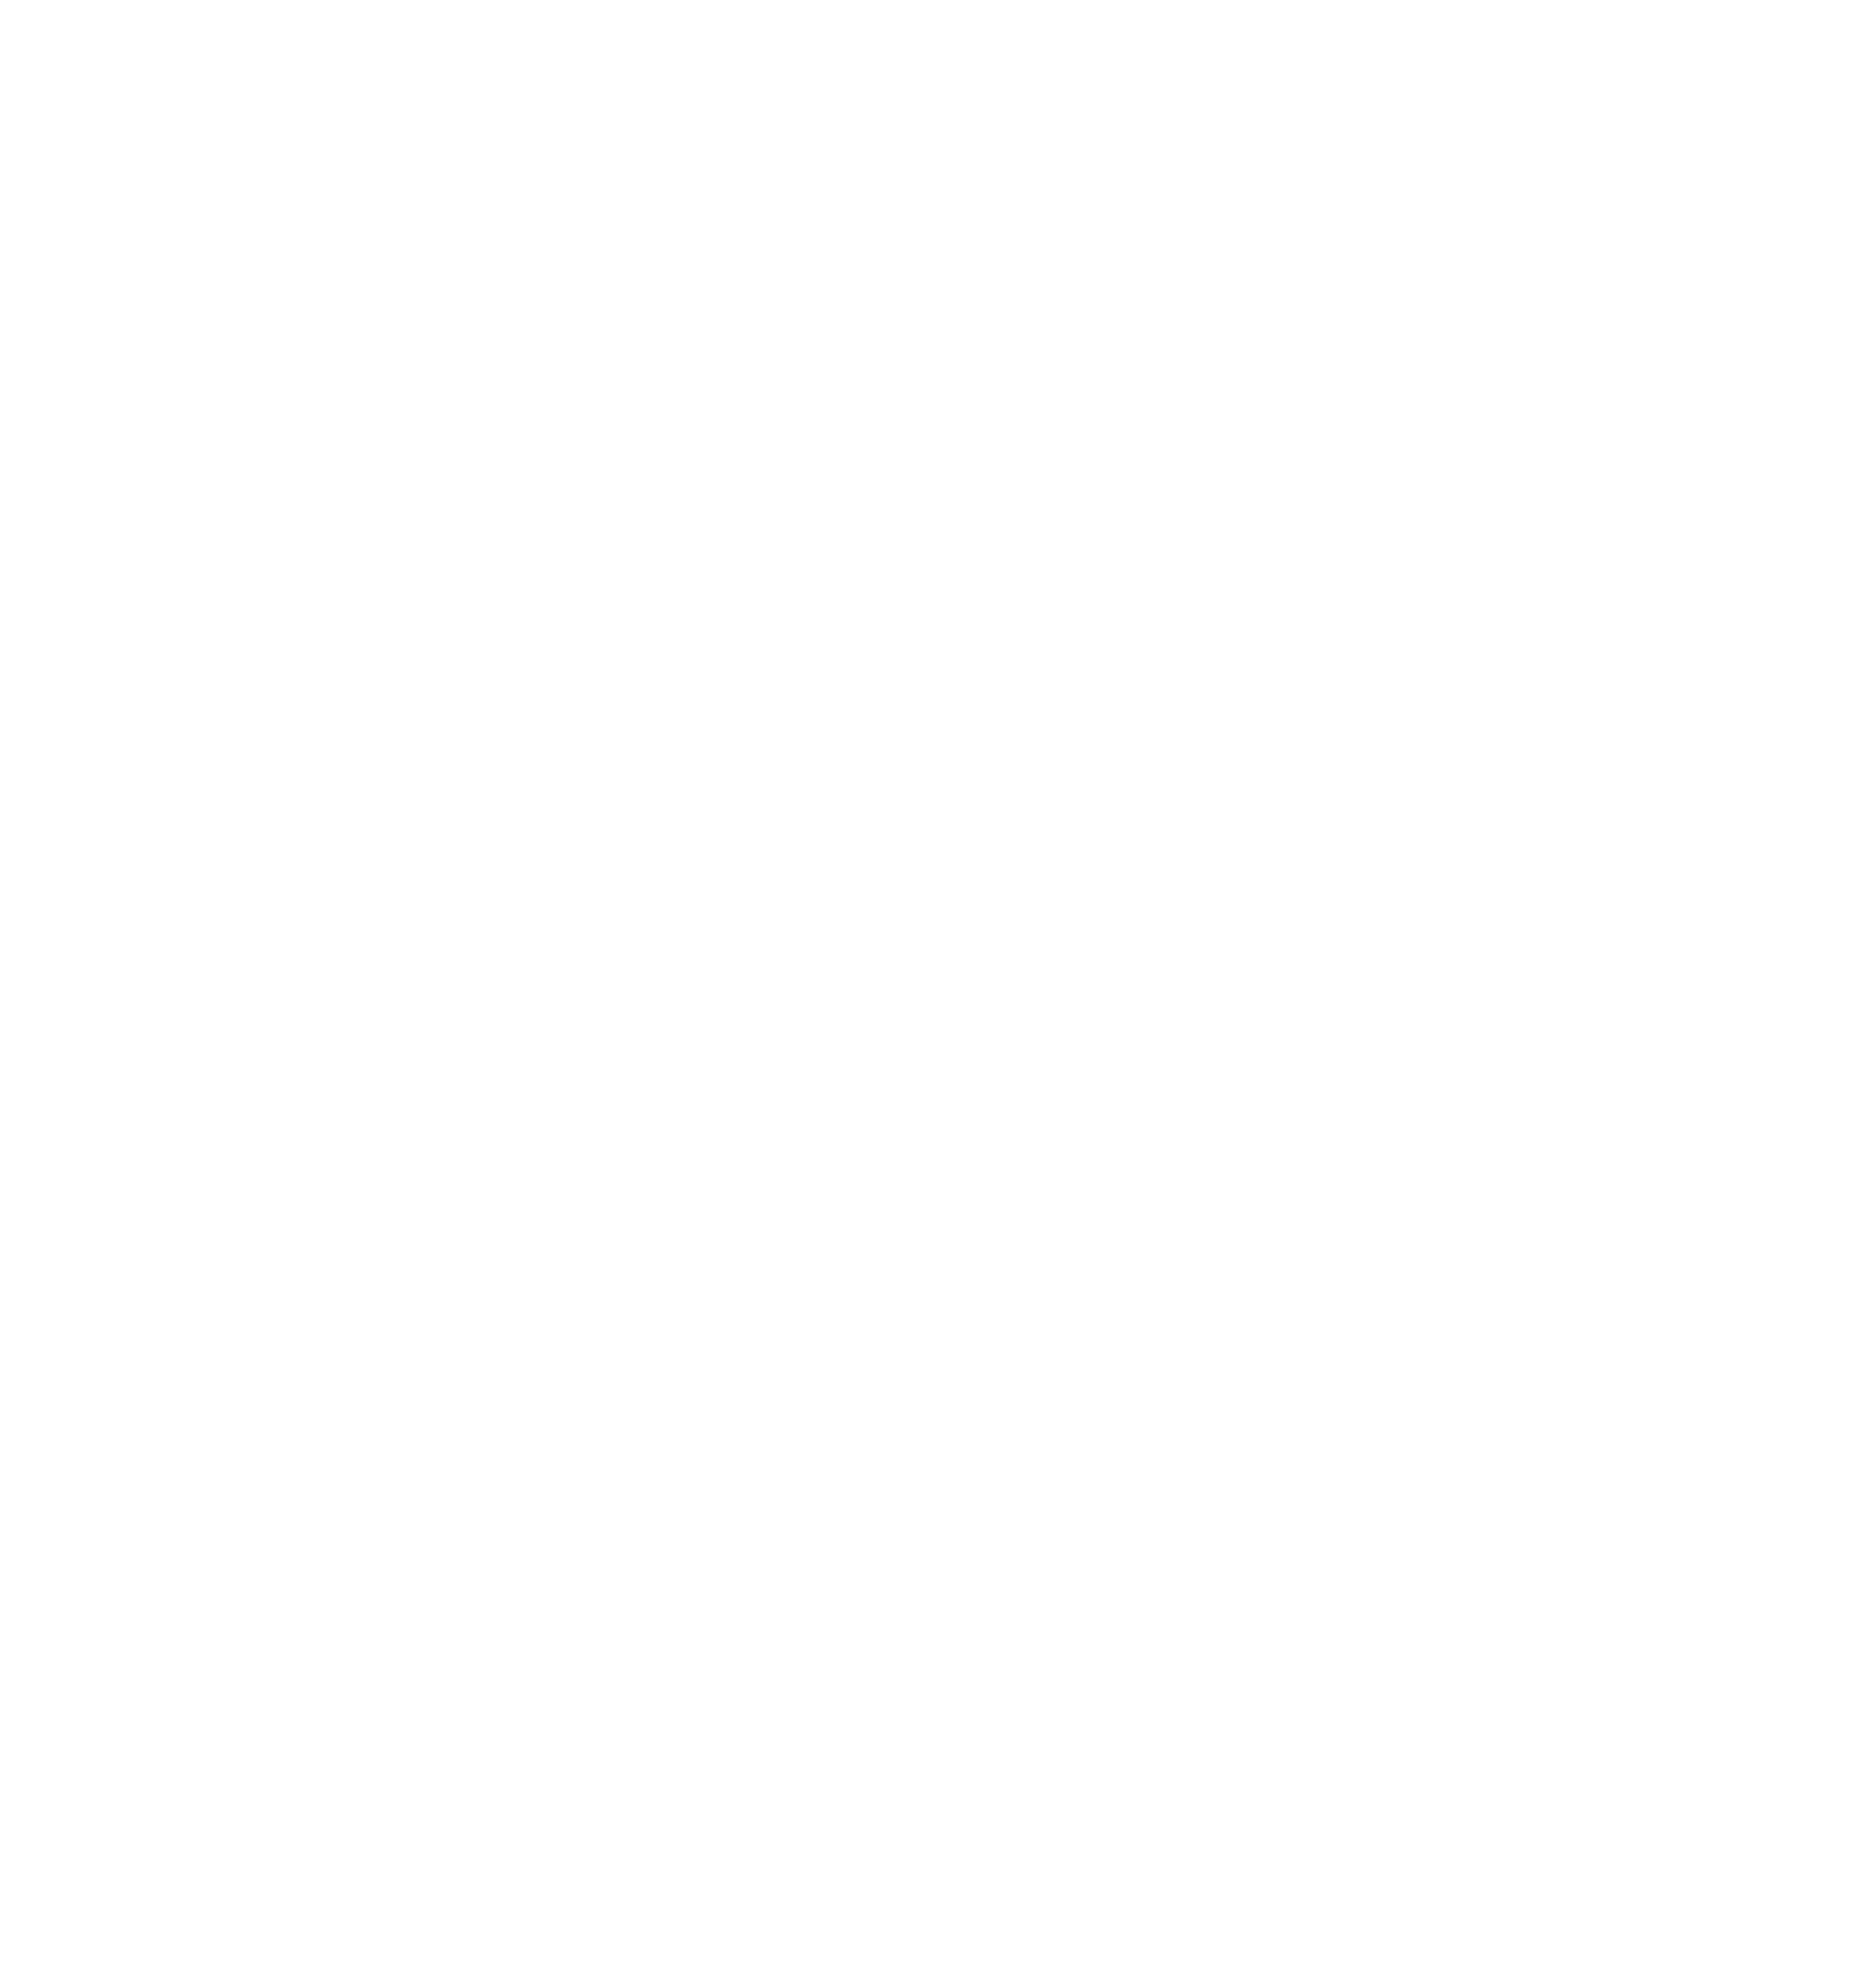 BACKFLIP Records